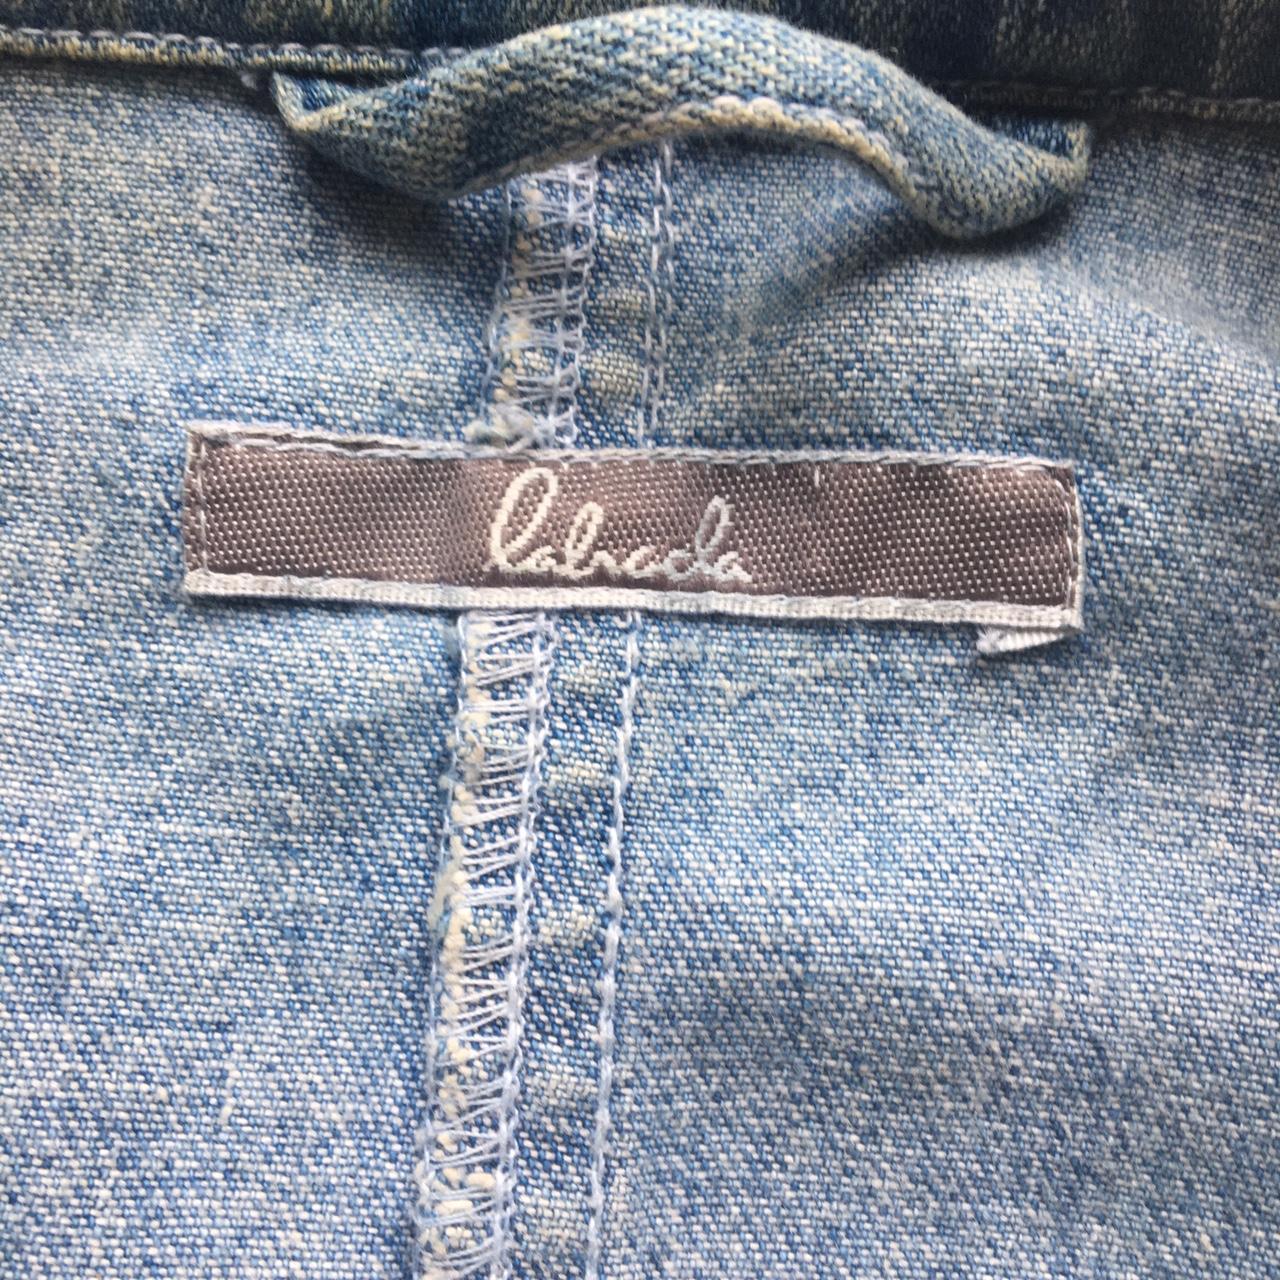 Vintage Labrada denim jacket. Marked as size 16. In... - Depop